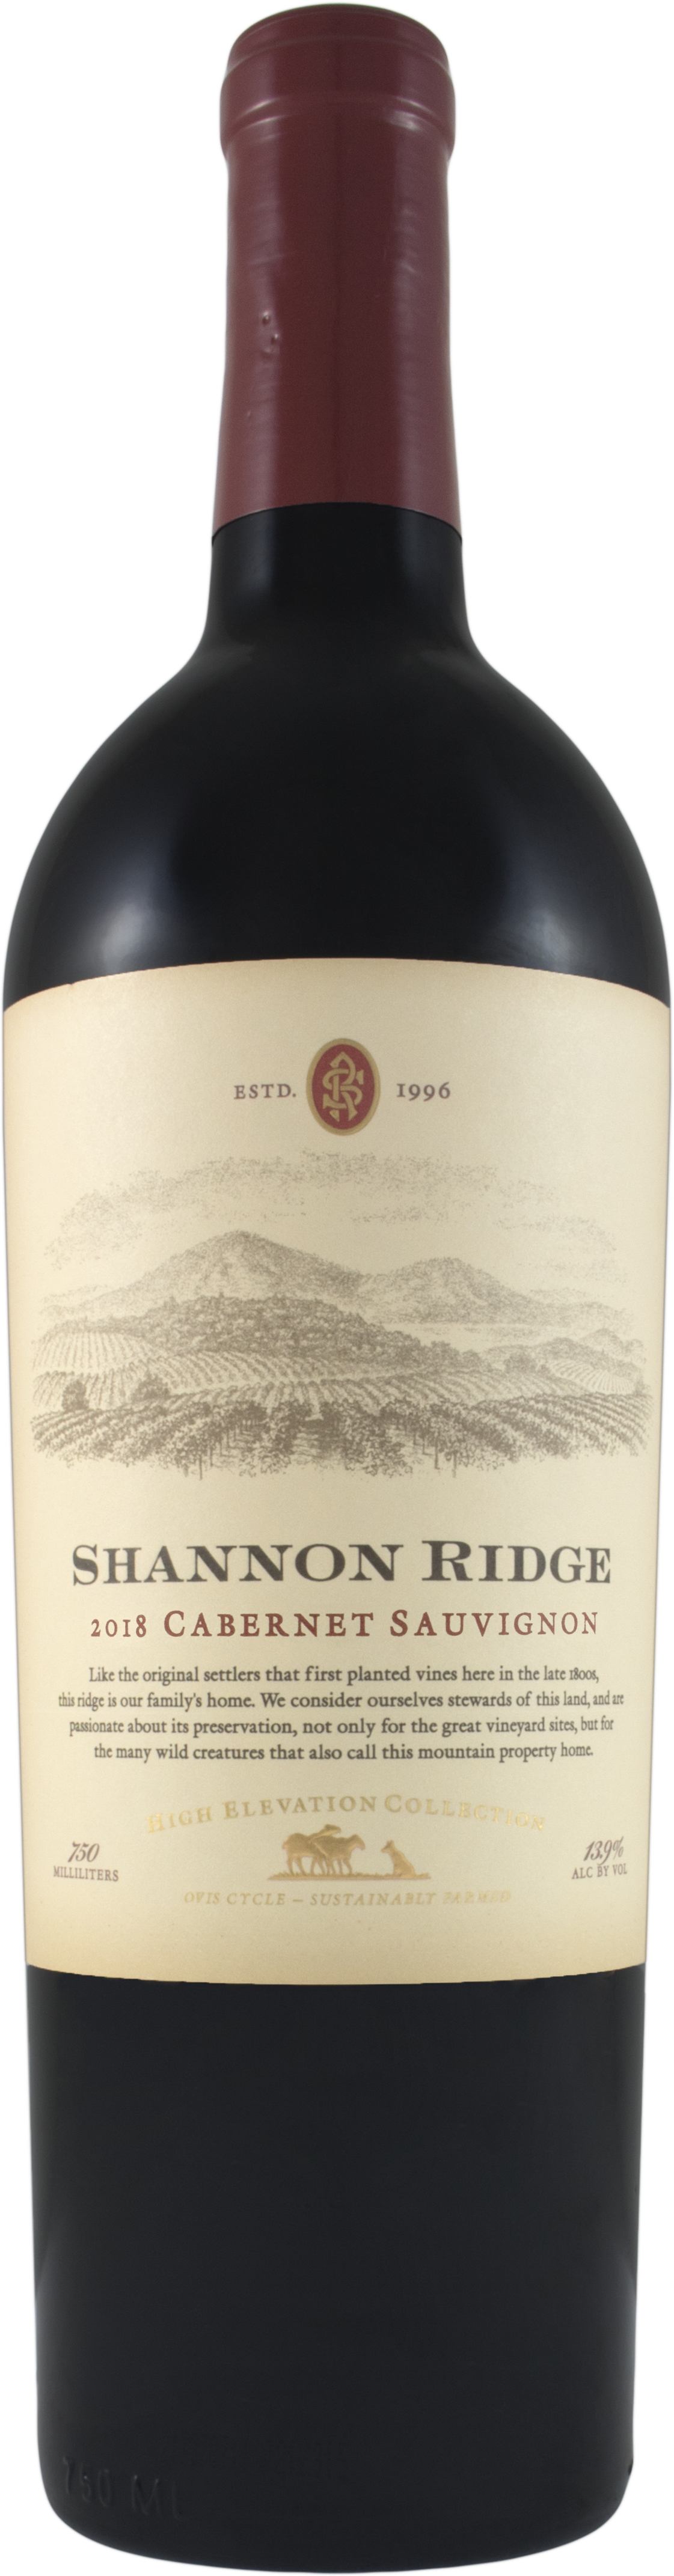 images/wine/Red Wine/Shannon Ridge Cabernet Sauvignon .png